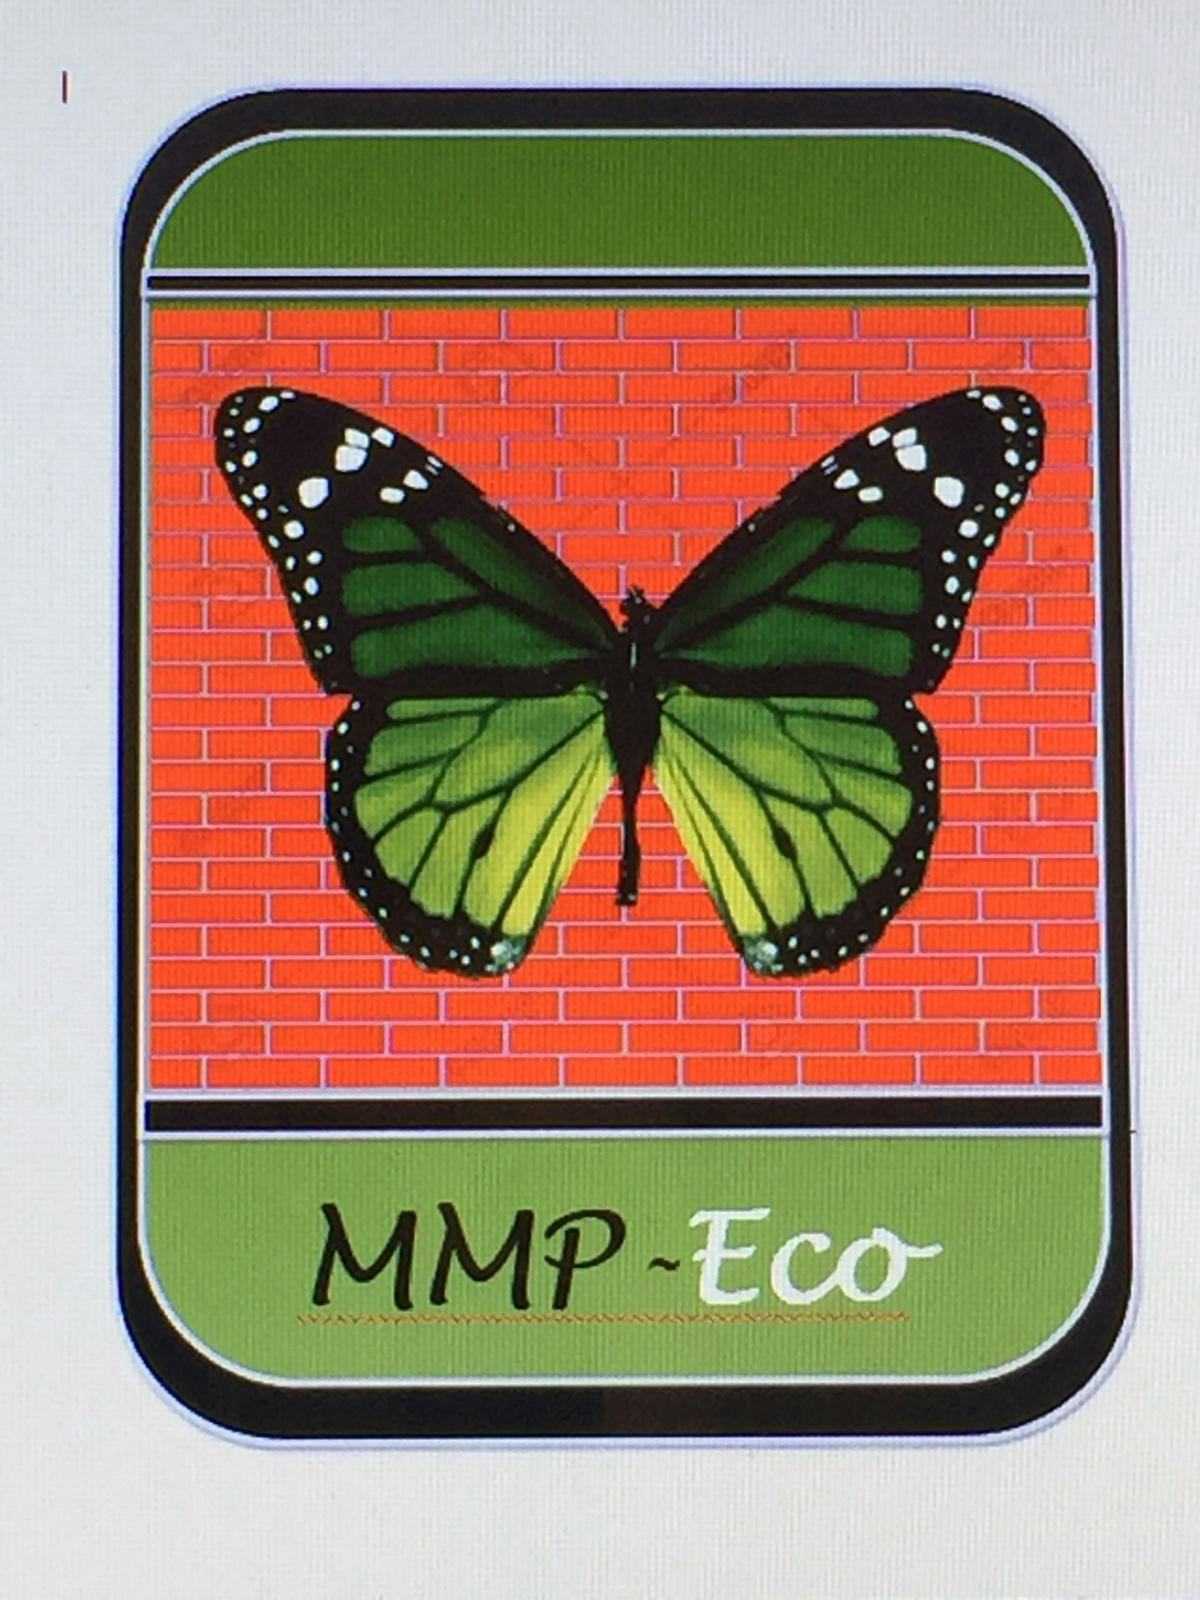 Mmp-Eco